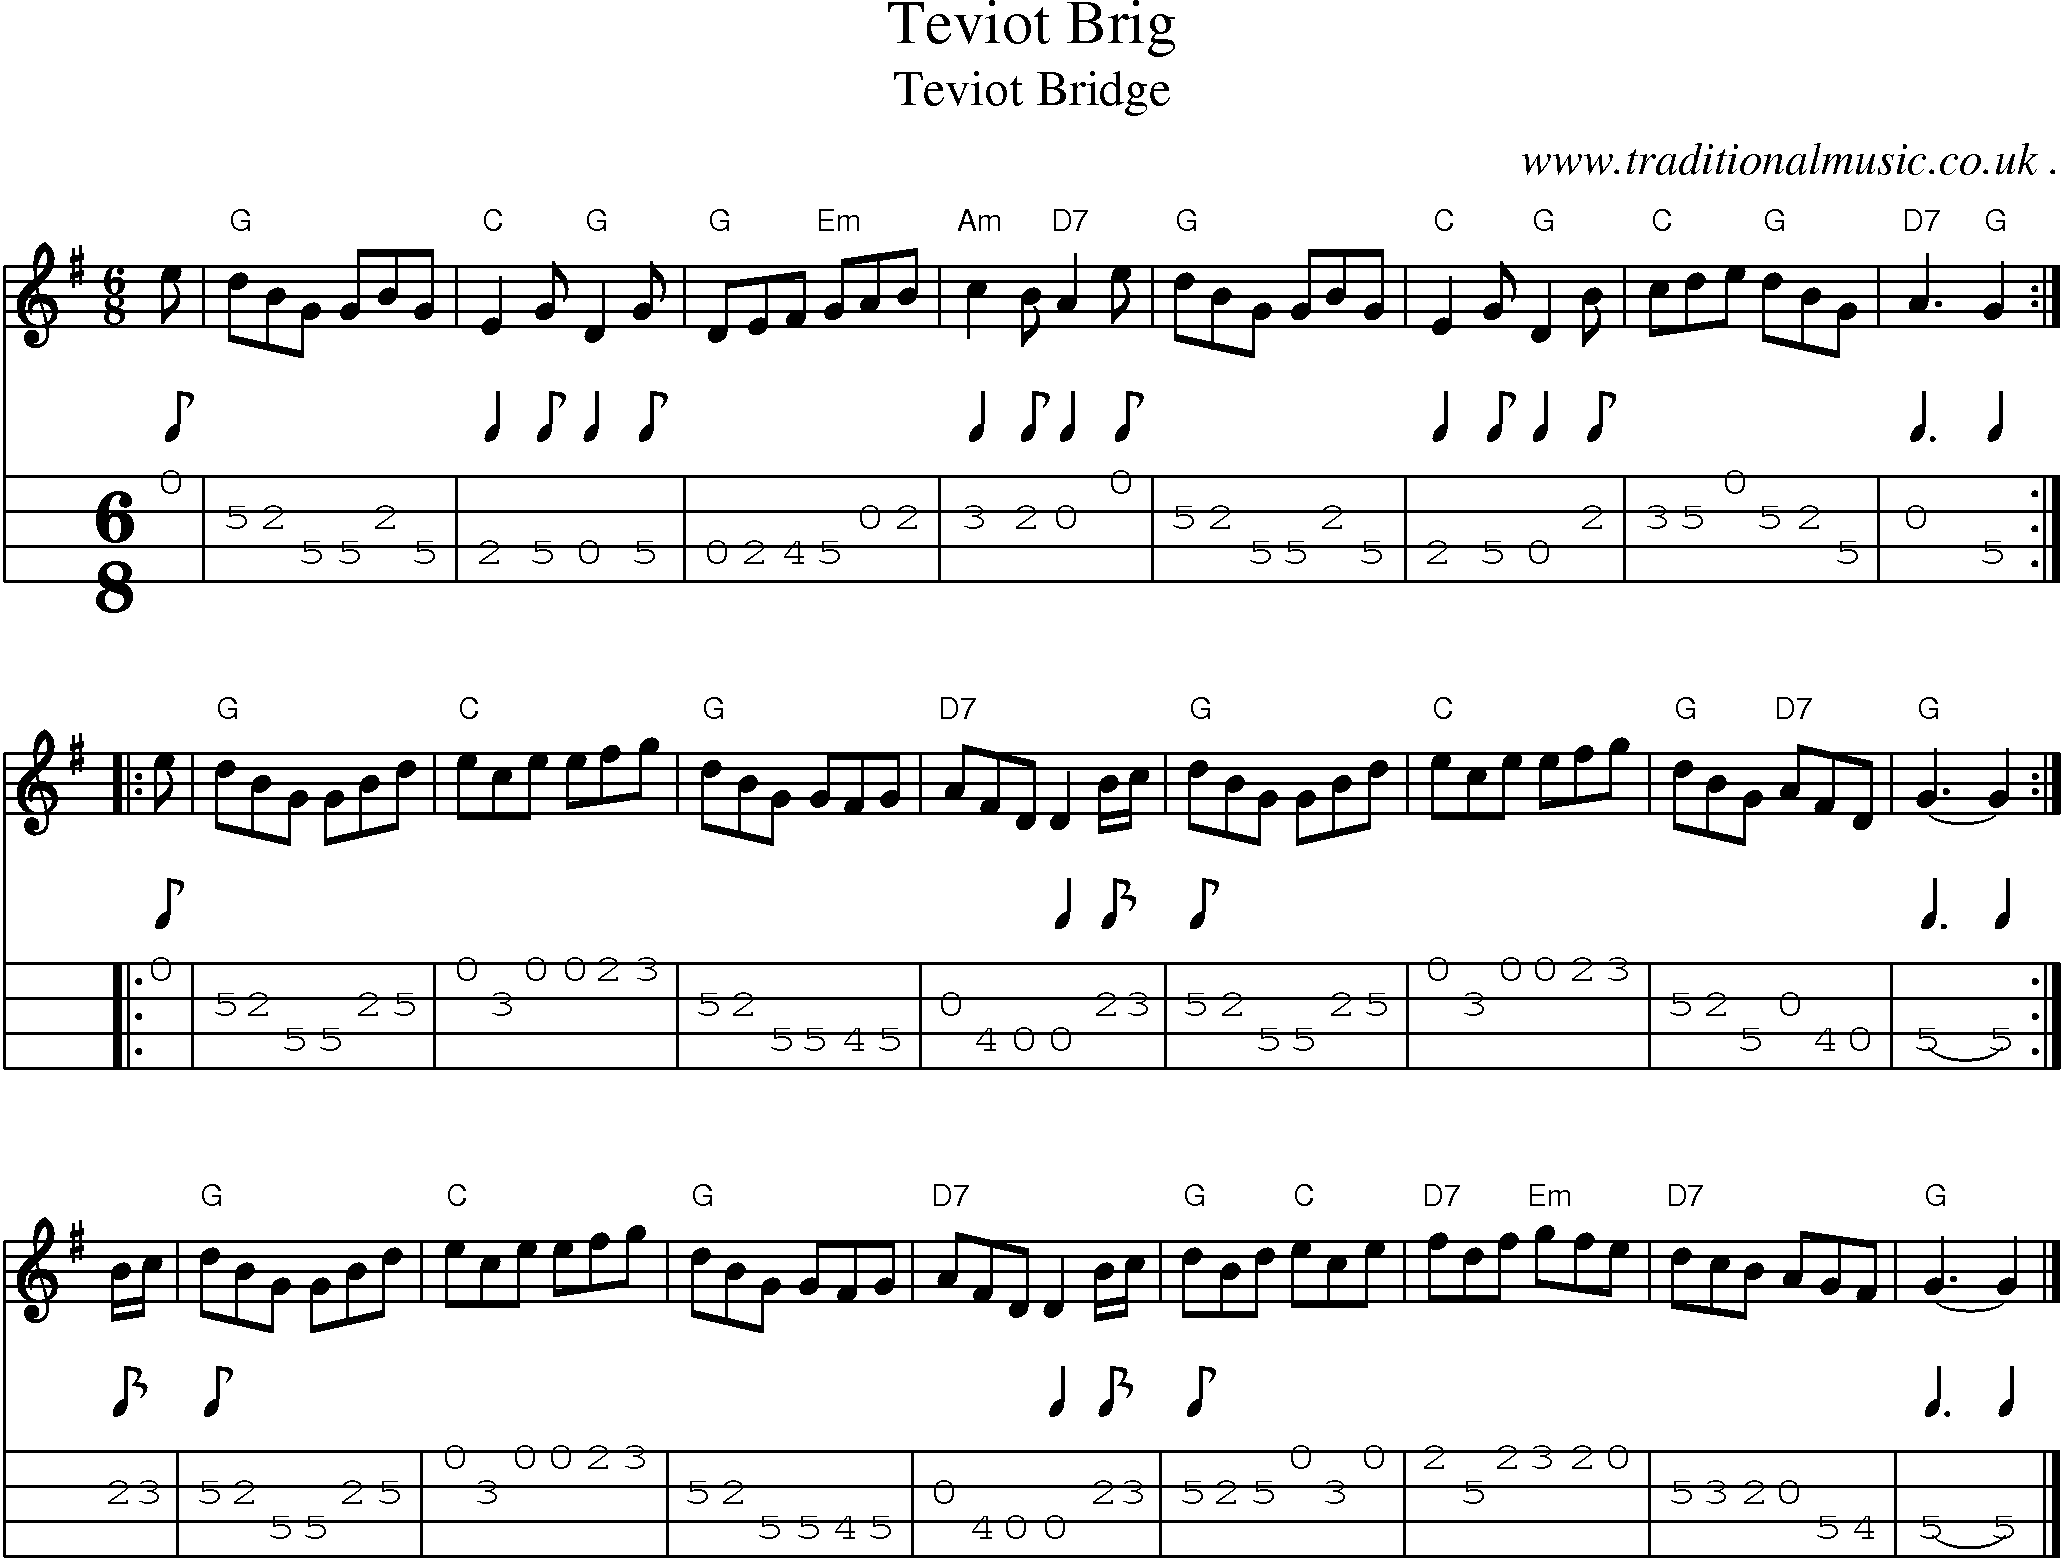 Sheet-music  score, Chords and Mandolin Tabs for Teviot Brig